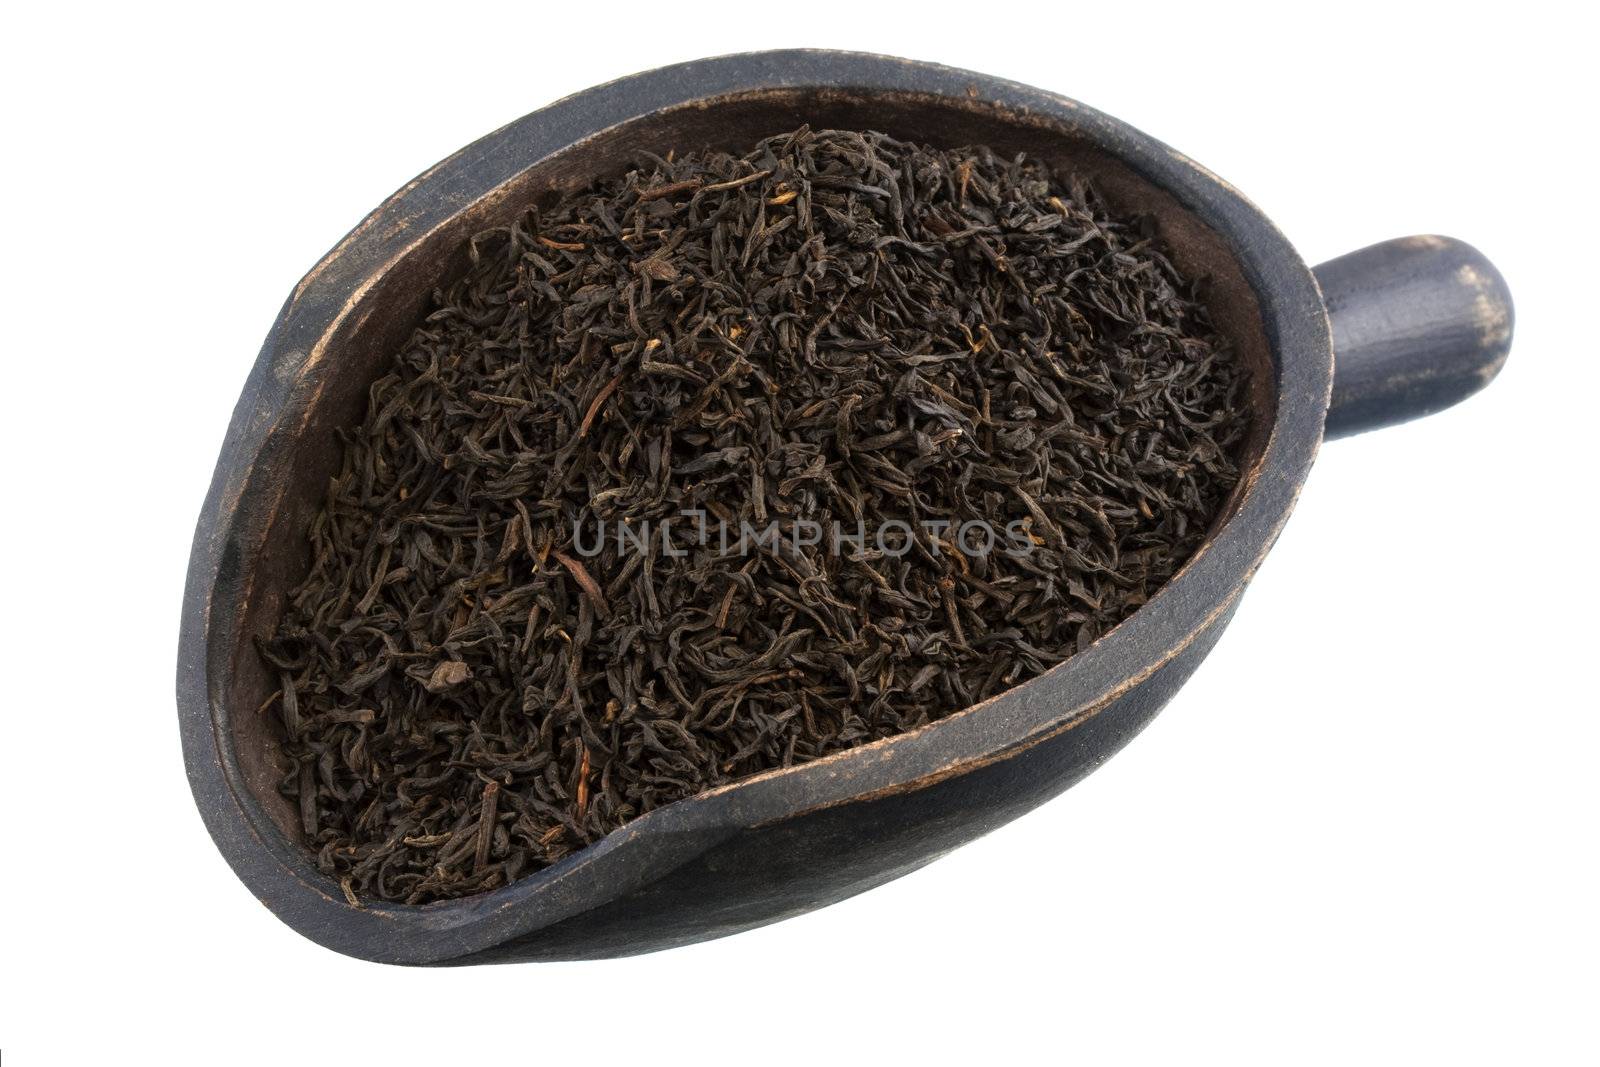 full leaf loose breakfast keemun oolong tea on a rustic, wooden scoop, isolated on white